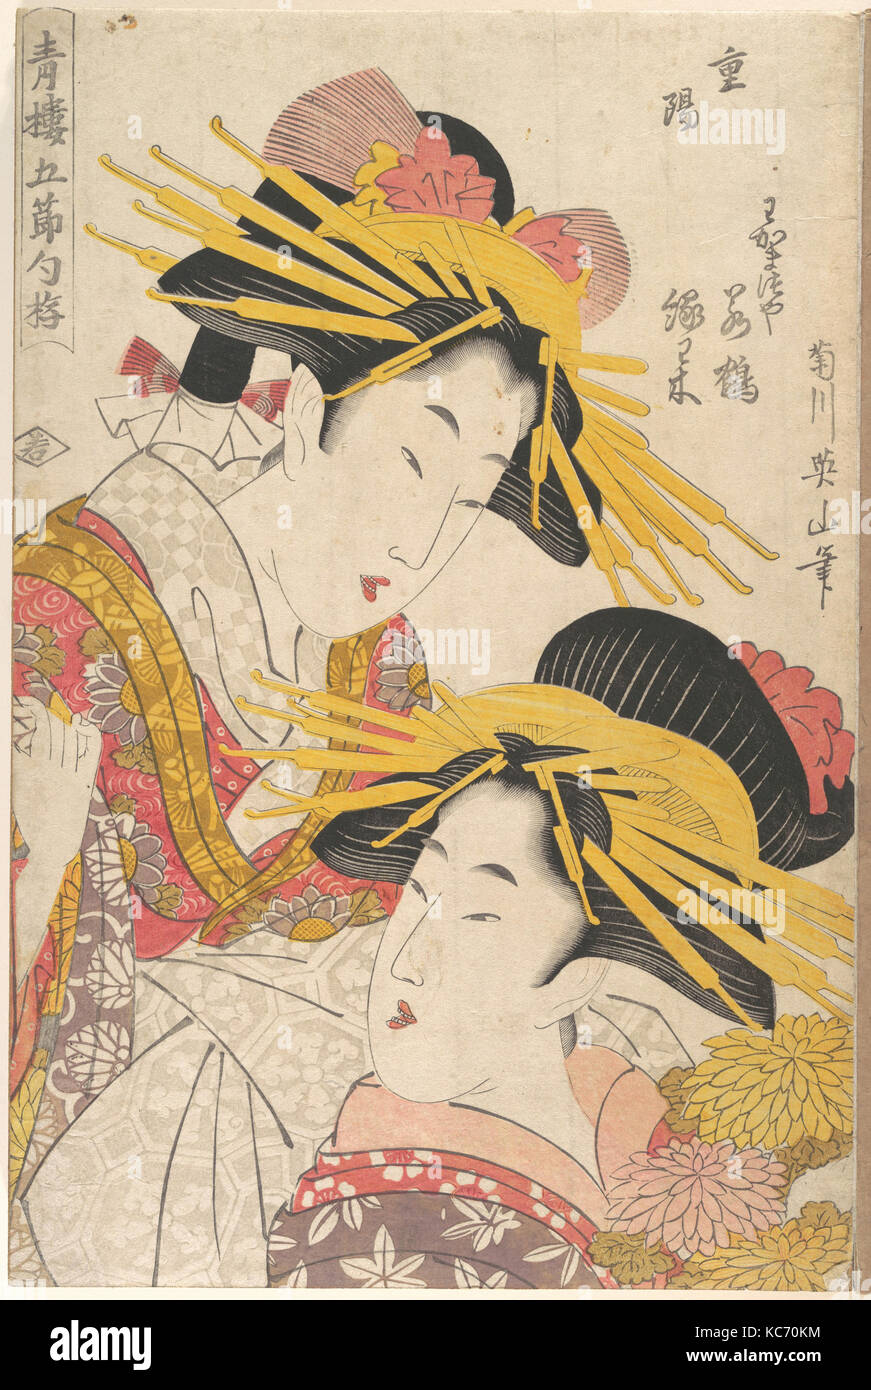 Album de gravures de Kikugawa Eizan, Utagawa Kunisada Utagawa Kunimaru, et, dix-neuf estampes de Kikugawa Eizan, 19e siècle Banque D'Images